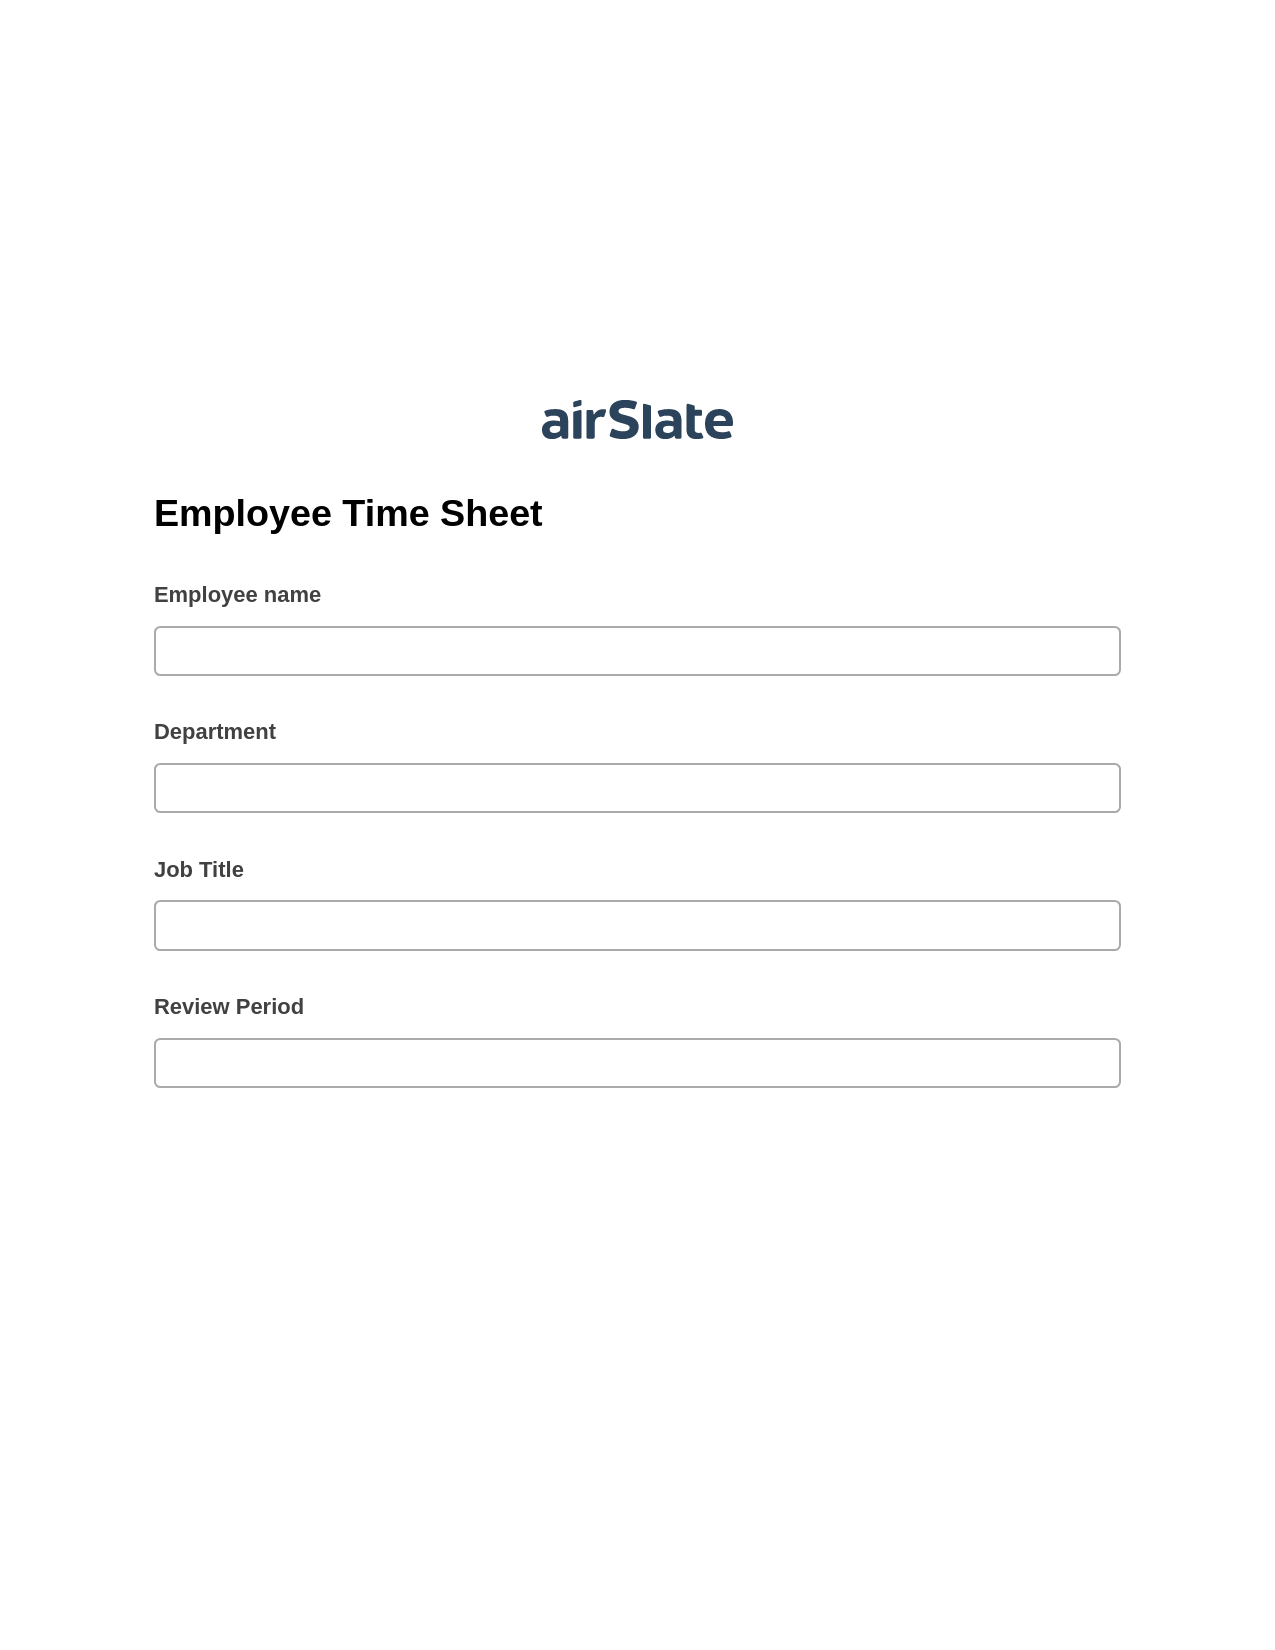 Multirole Employee Time Sheet Pre-fill from CSV File Bot, Update Salesforce Records Bot, Slack Two-Way Binding Bot